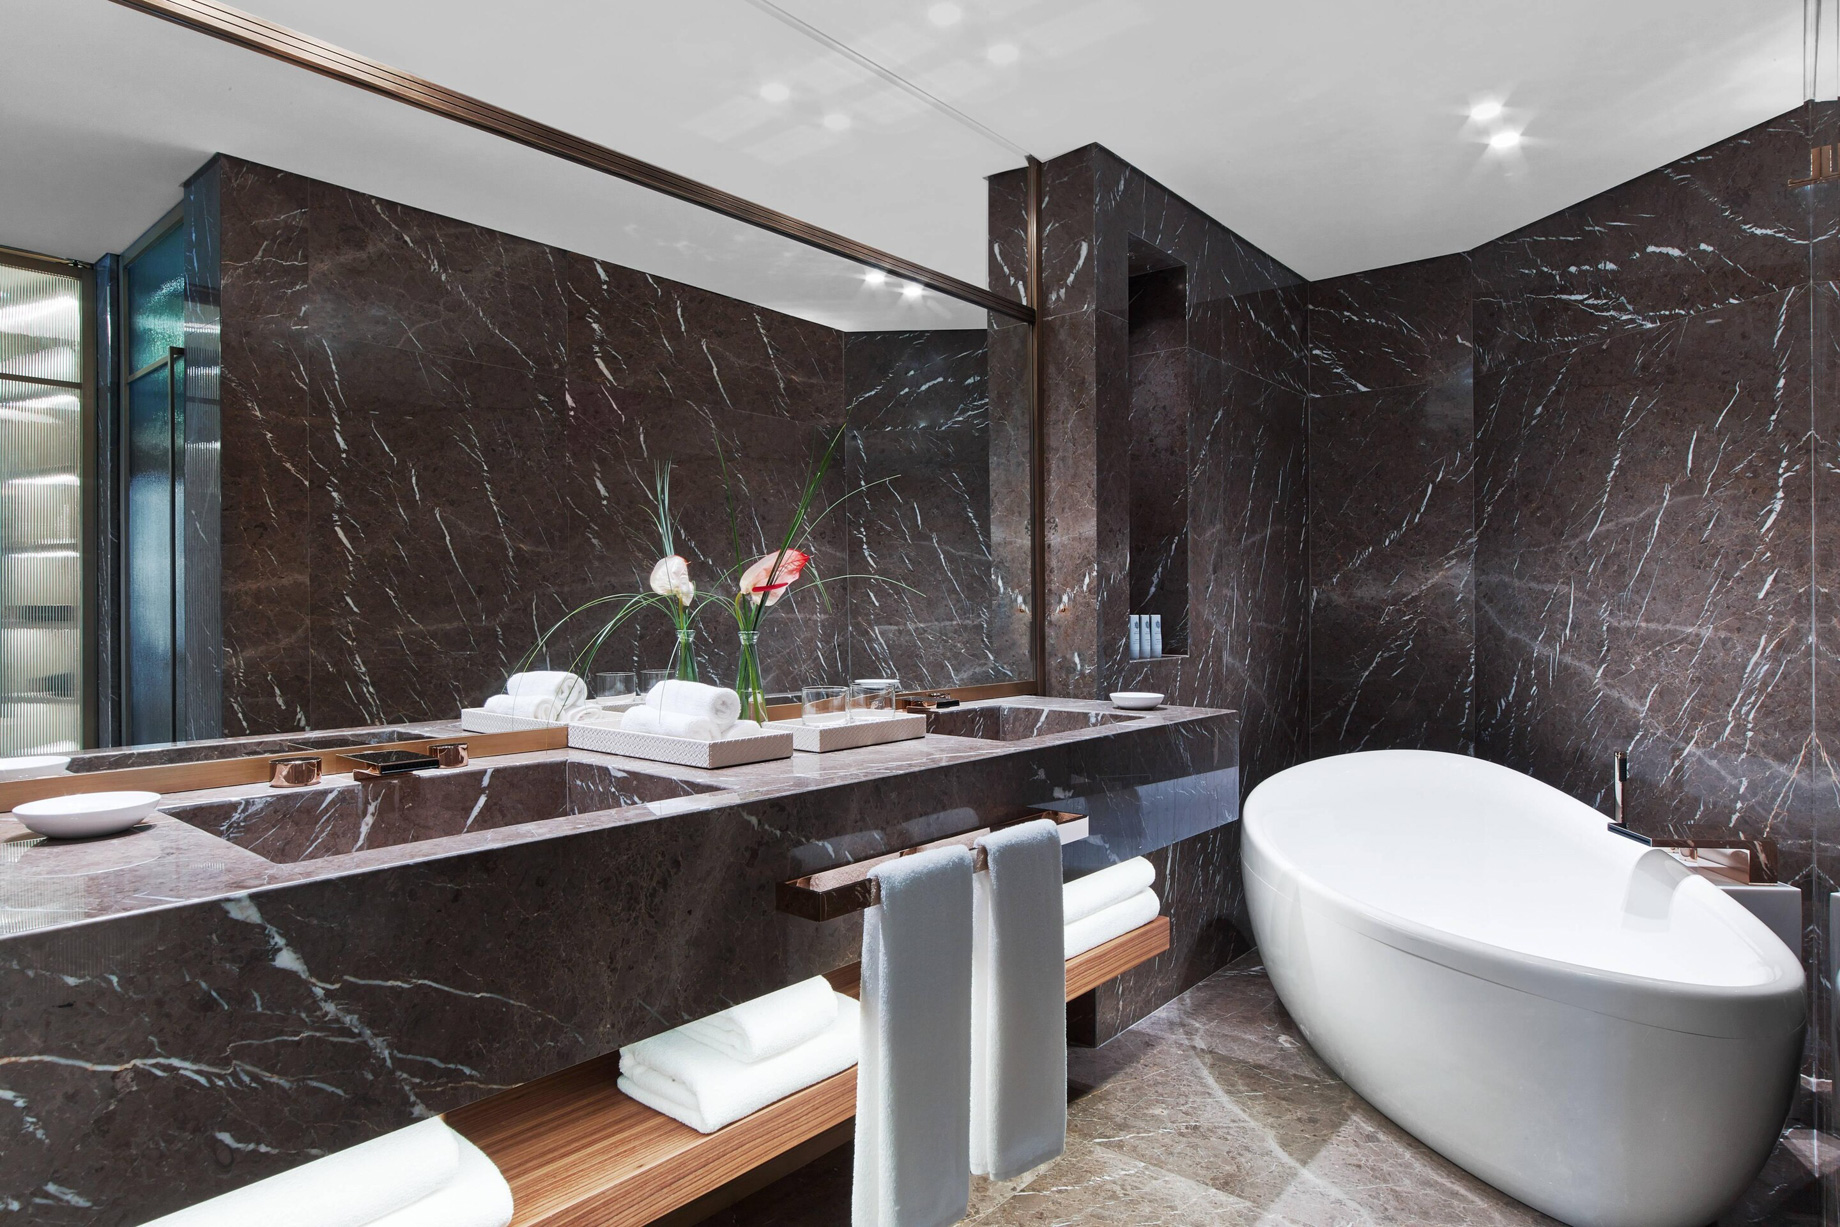 The St. Regis Istanbul Hotel – Istanbul, Turkey – Presidential Suite Bathroom Vanity and Tub